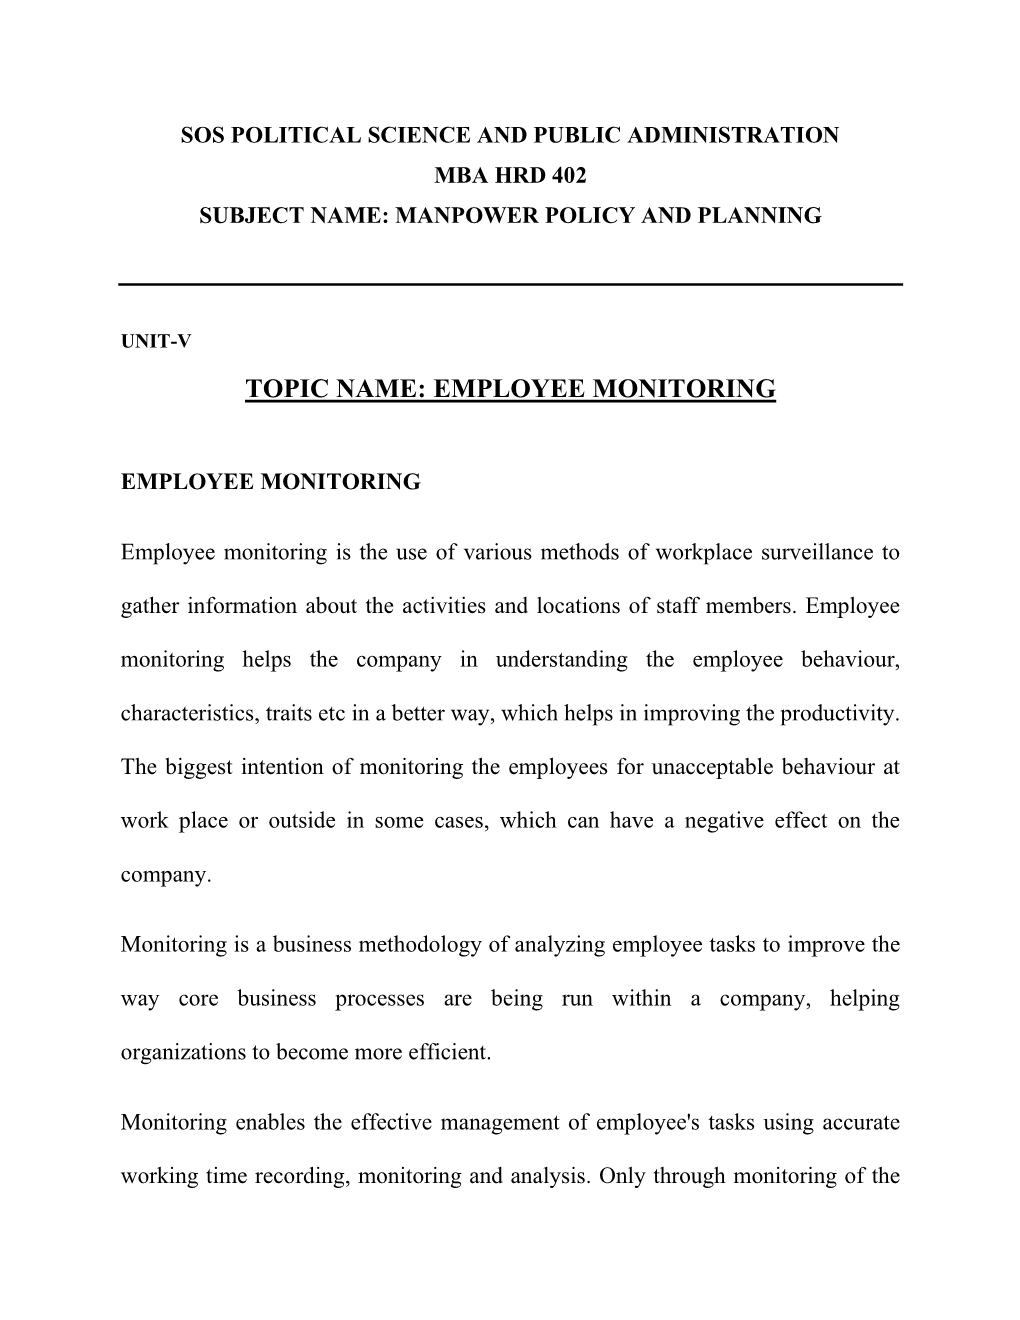 Topic Name: Employee Monitoring